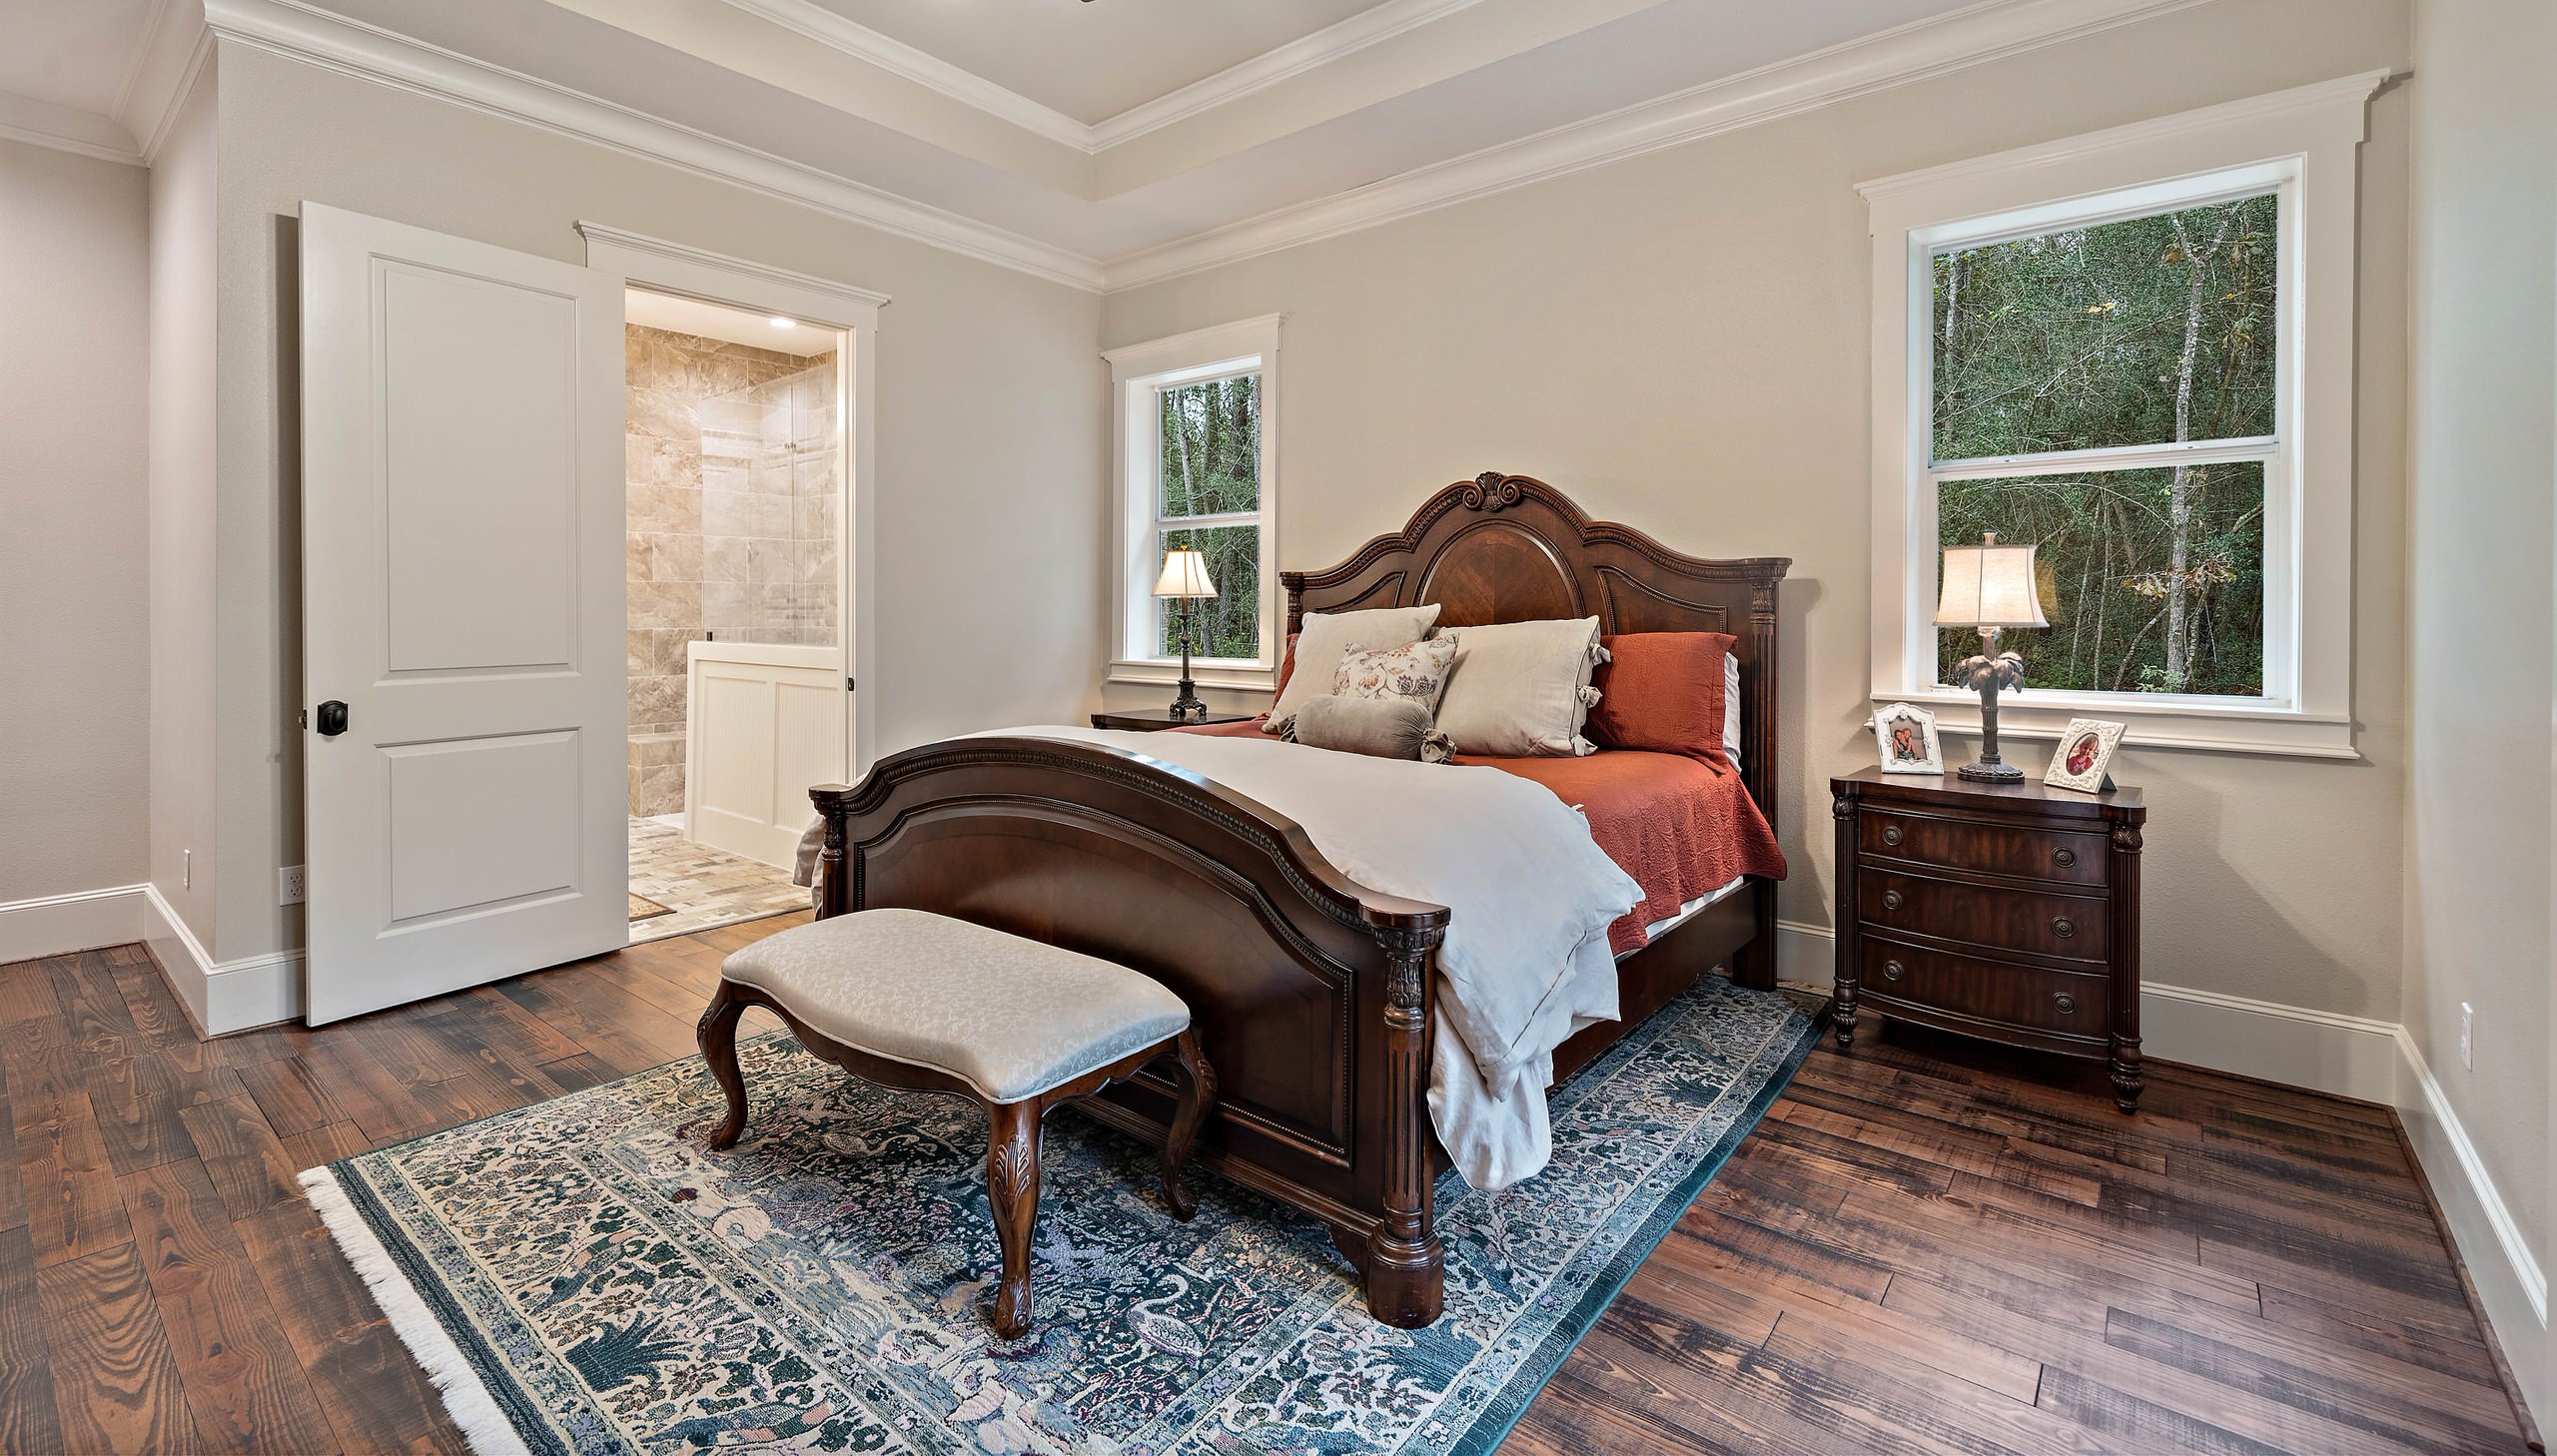 75 Beautiful Dark Wood Floor Bedroom, Bedroom Decor Ideas With Dark Wood Furniture